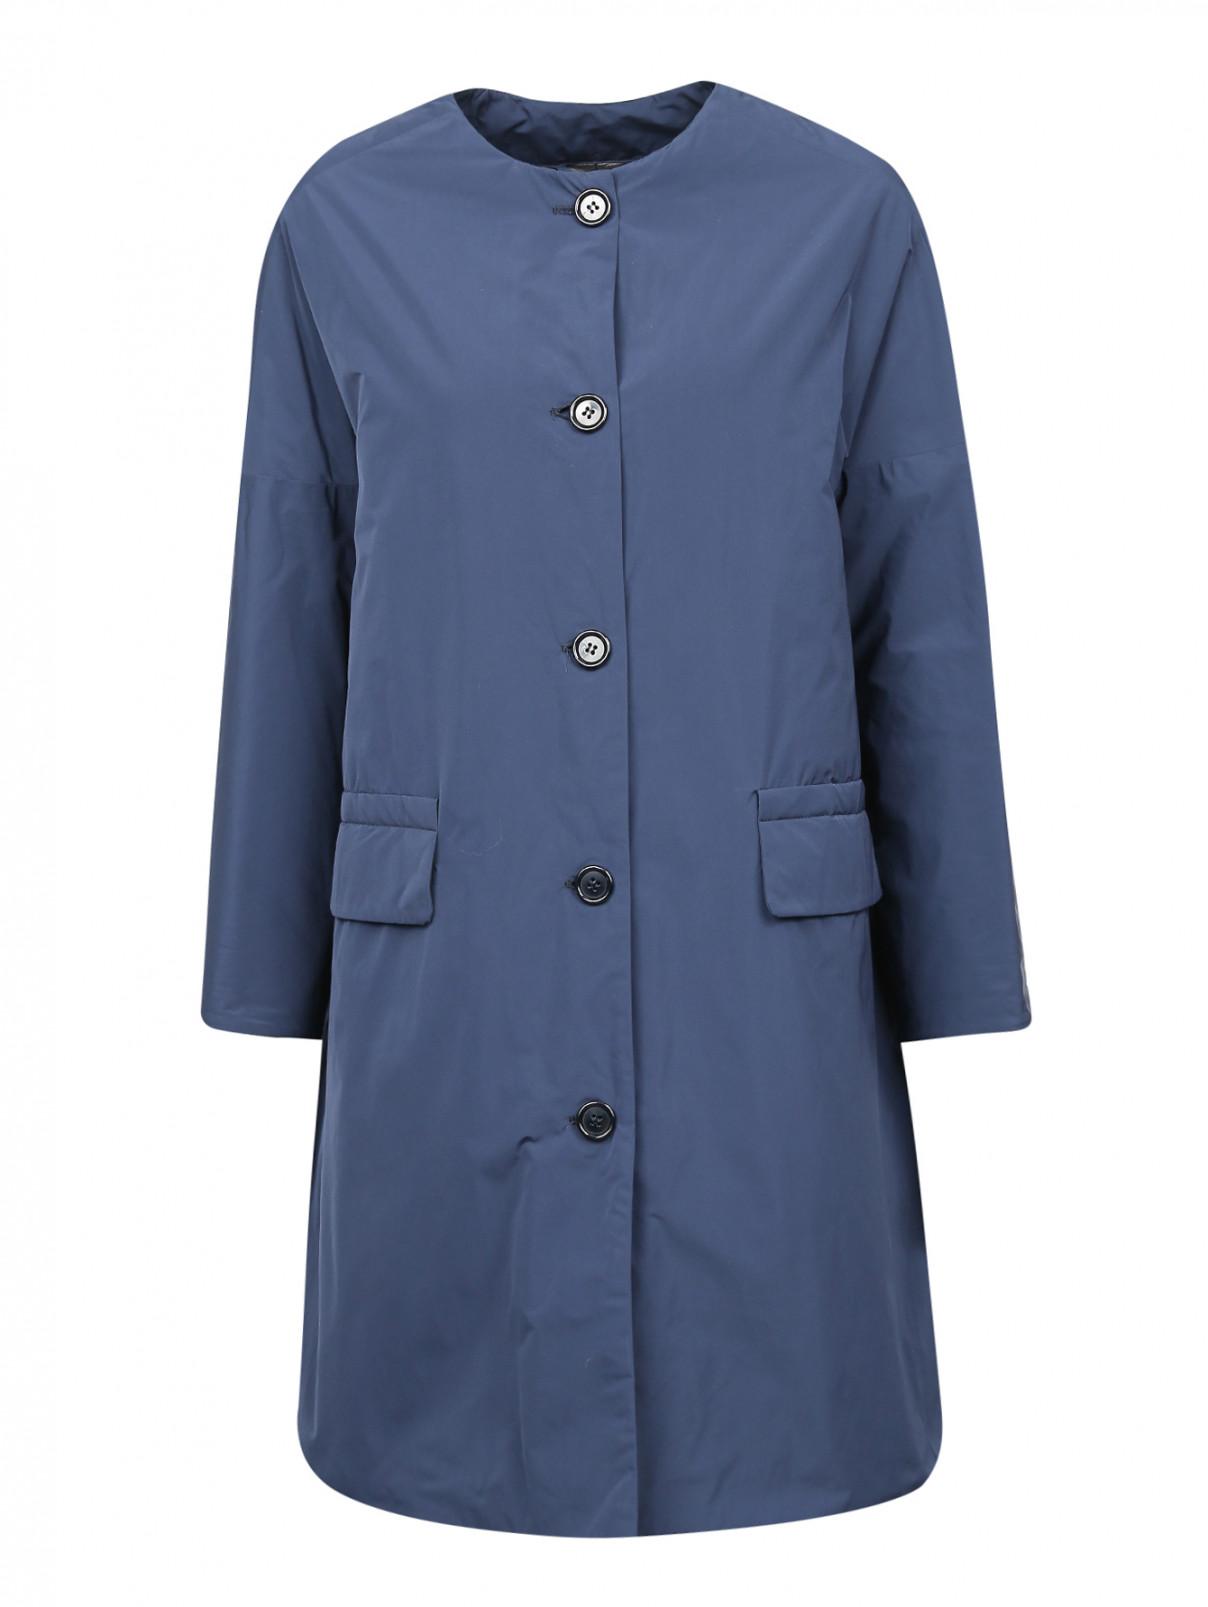 Пальто пуховое на пуговицах Aspesi  –  Общий вид  – Цвет:  Синий